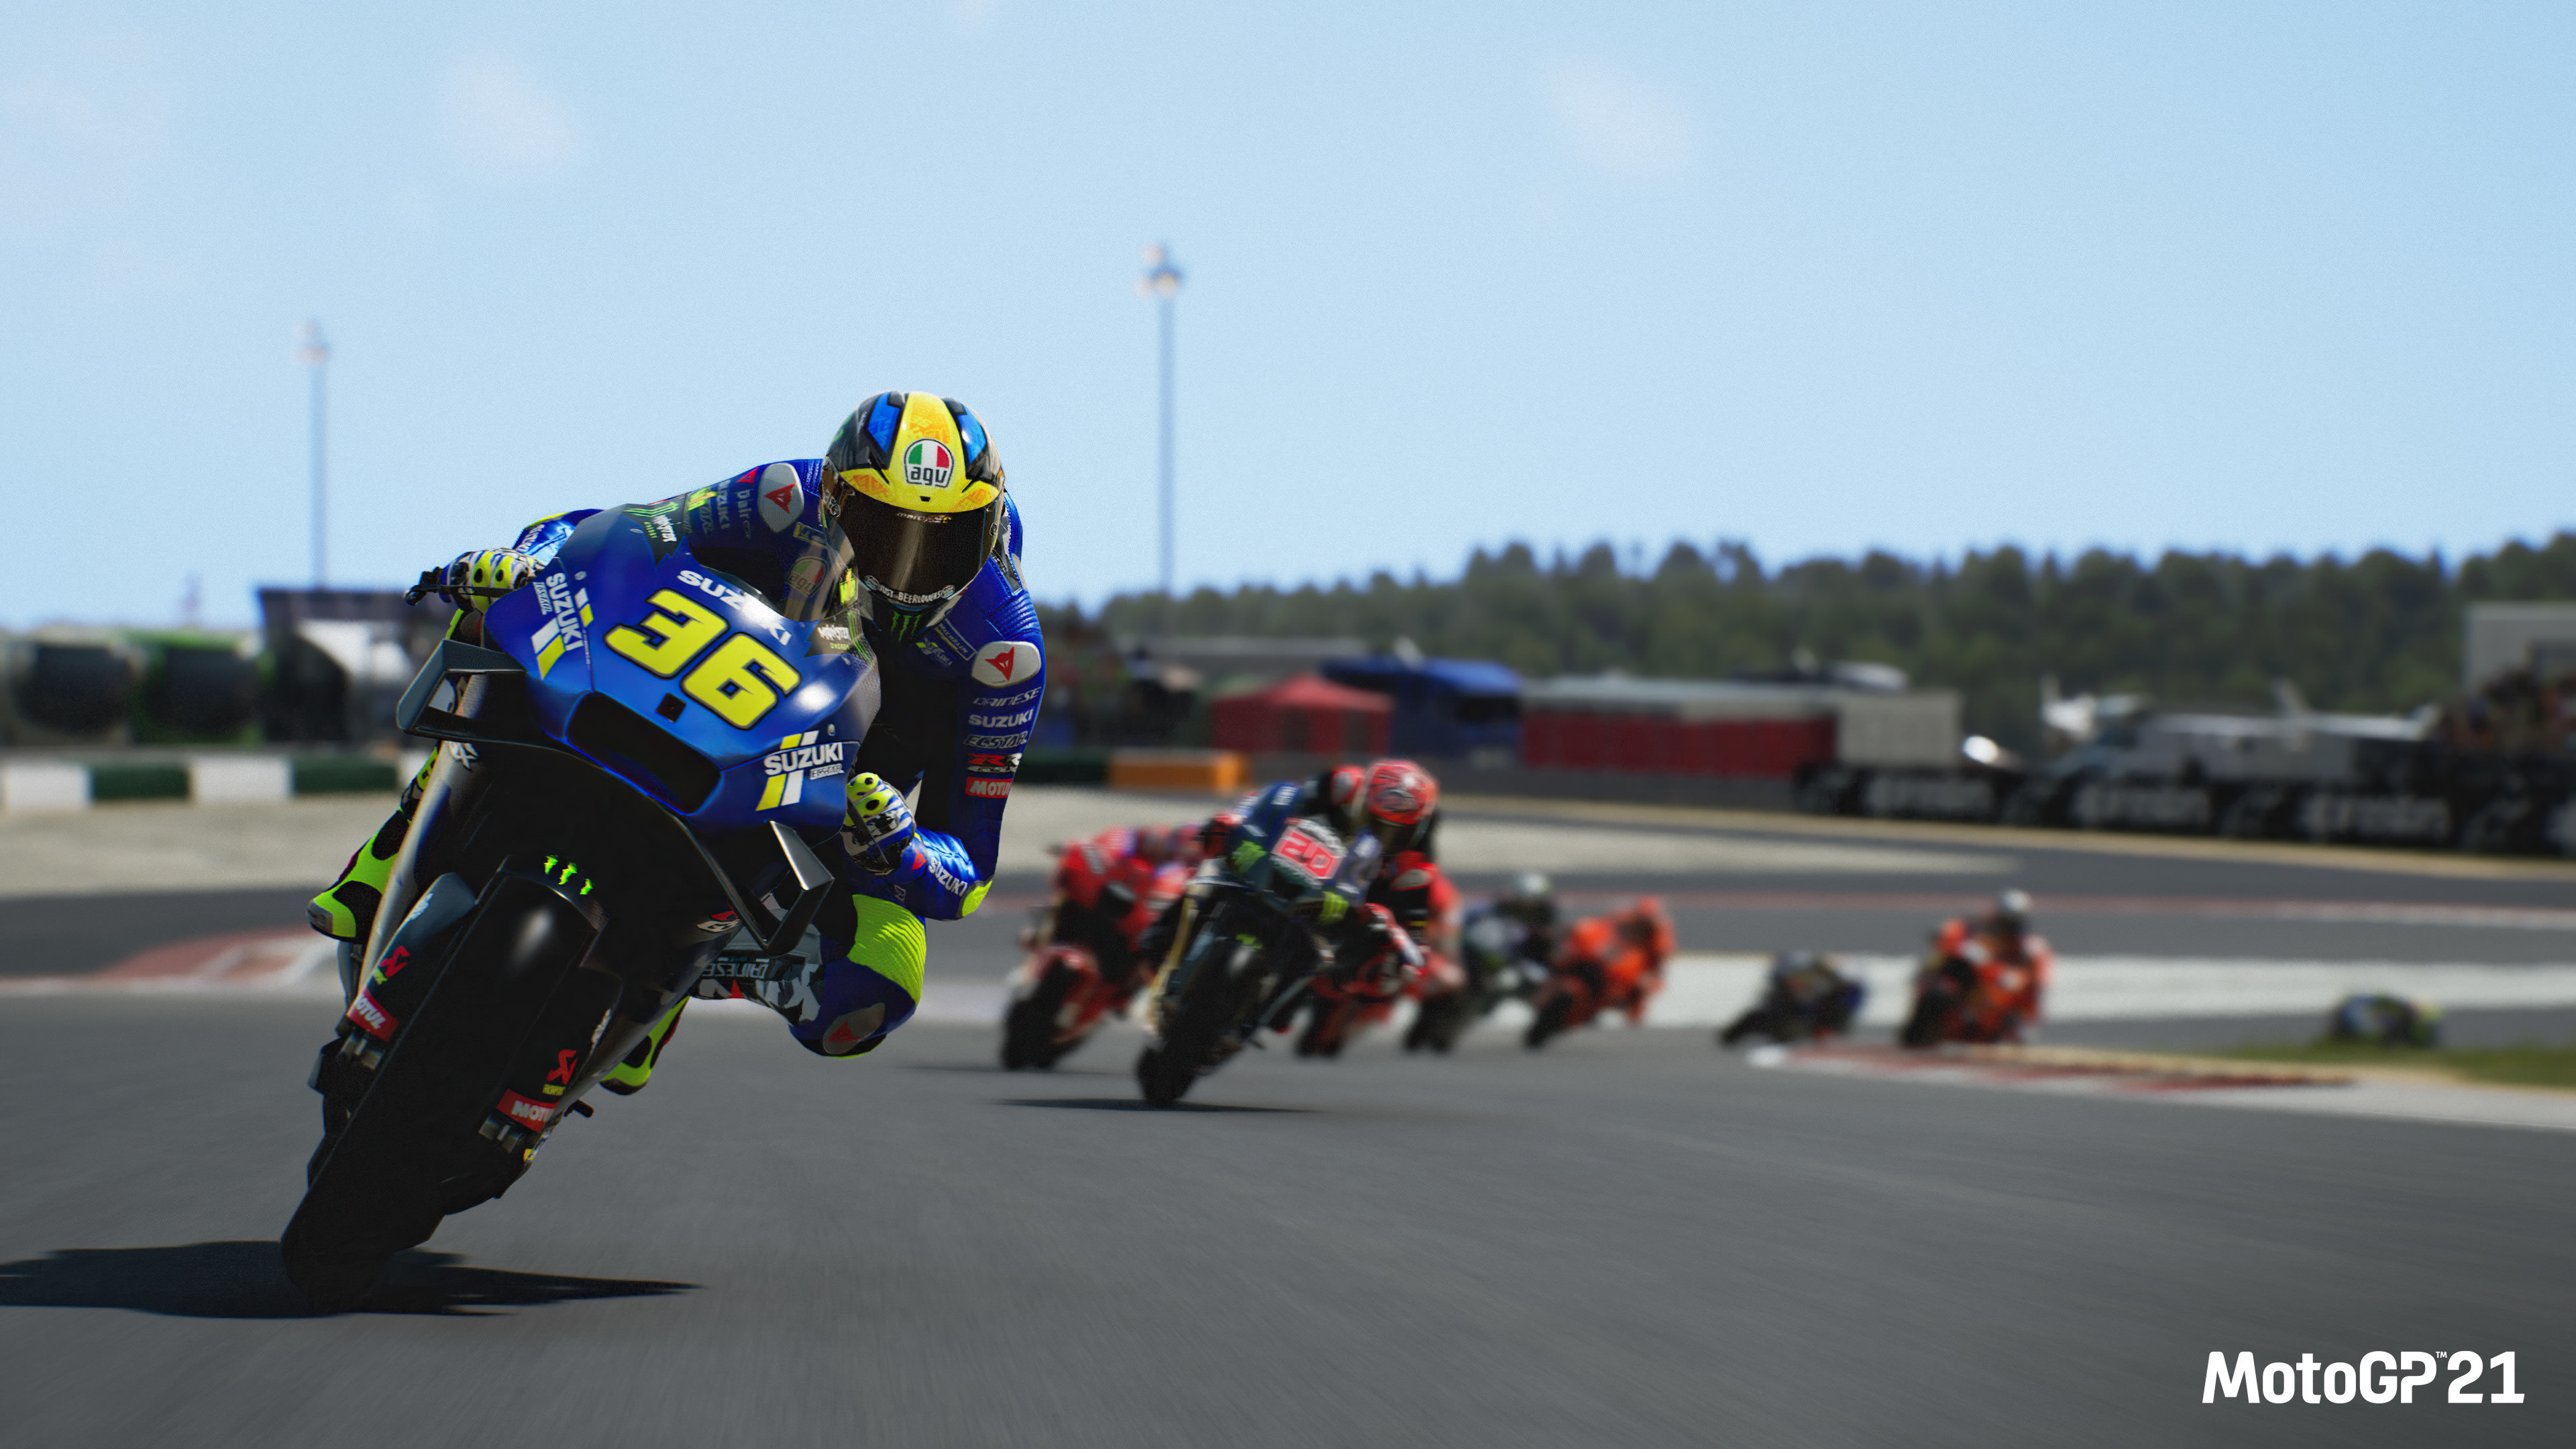 Video Game MotoGP 21 3840x2160